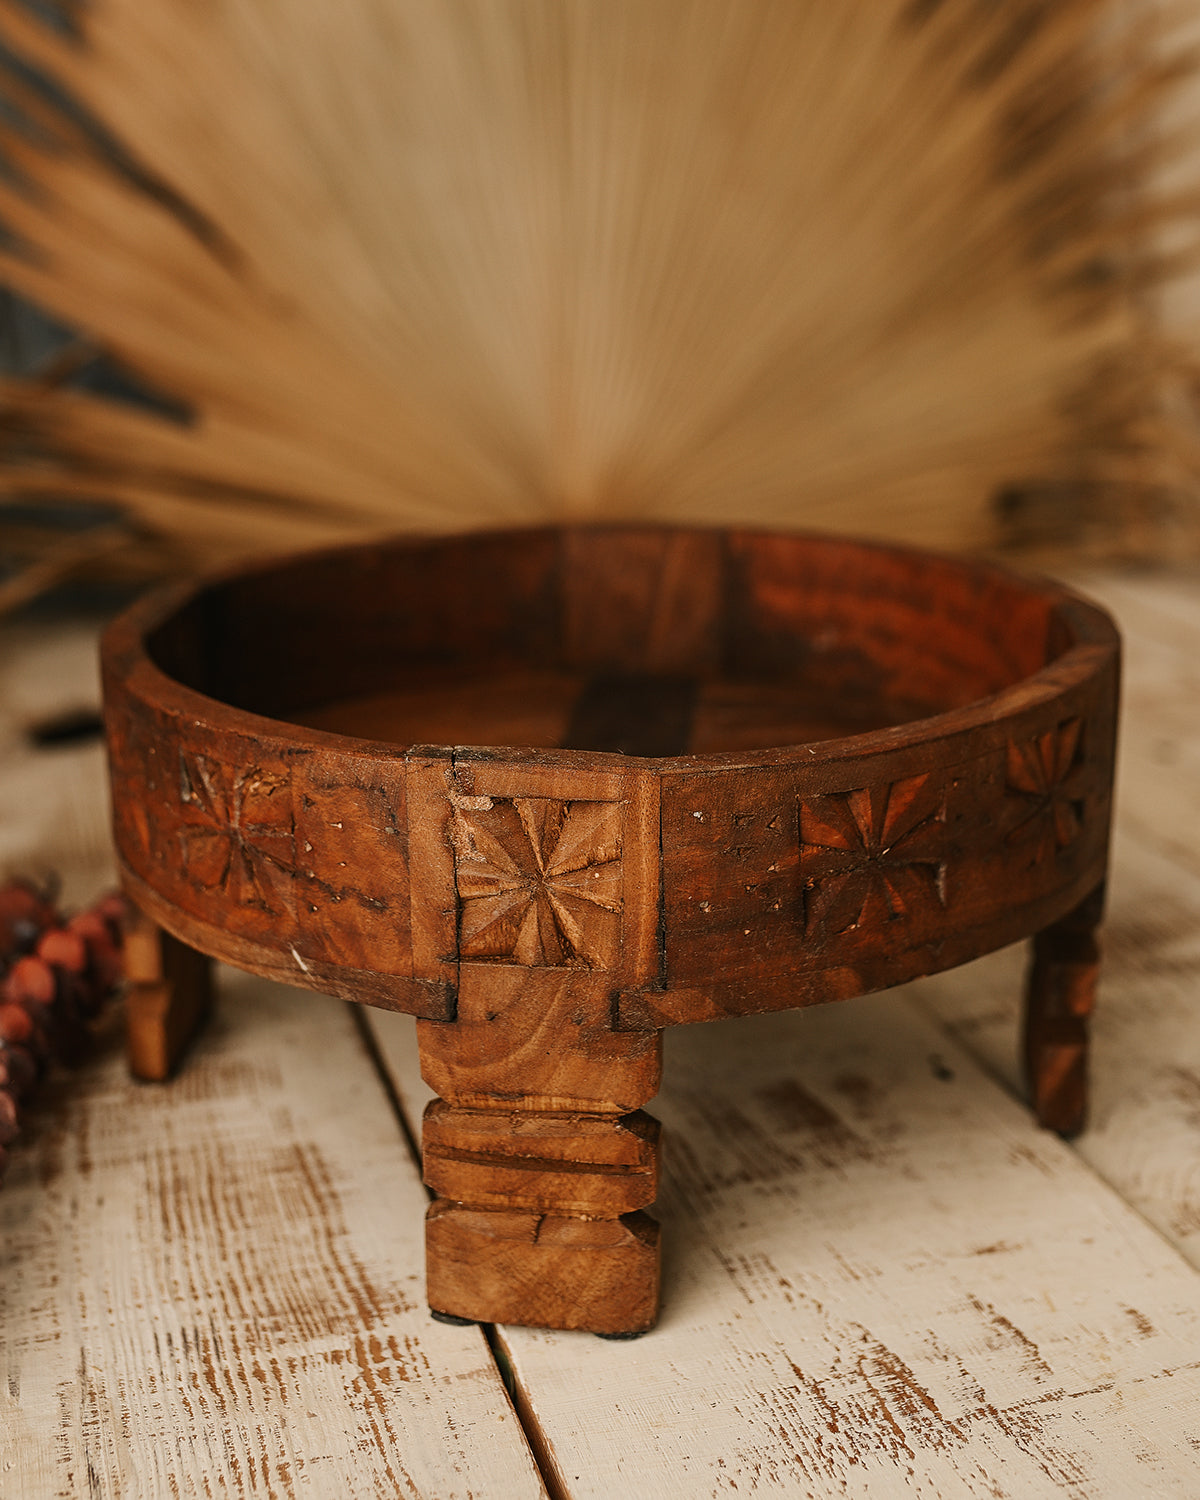 Nisha: Round wooden basket - Hindu table